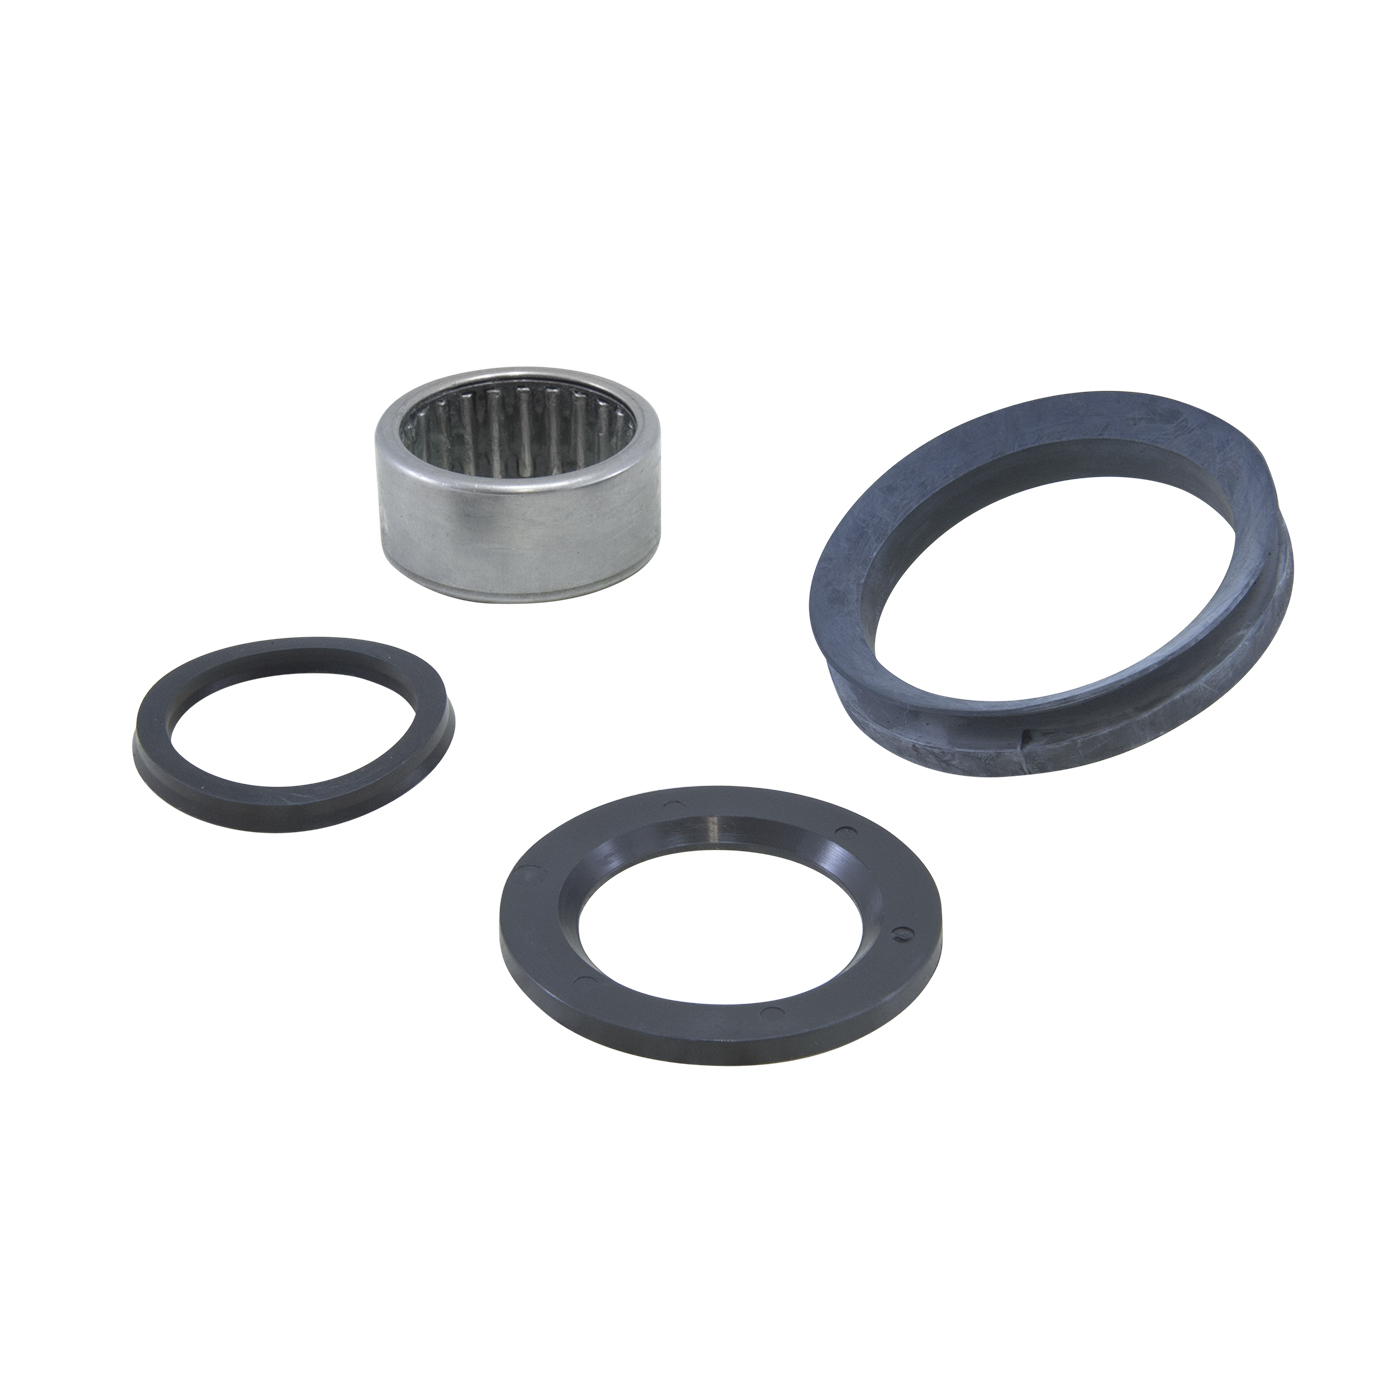 Spindle bearing / Seal kit for Dana 50 / 60